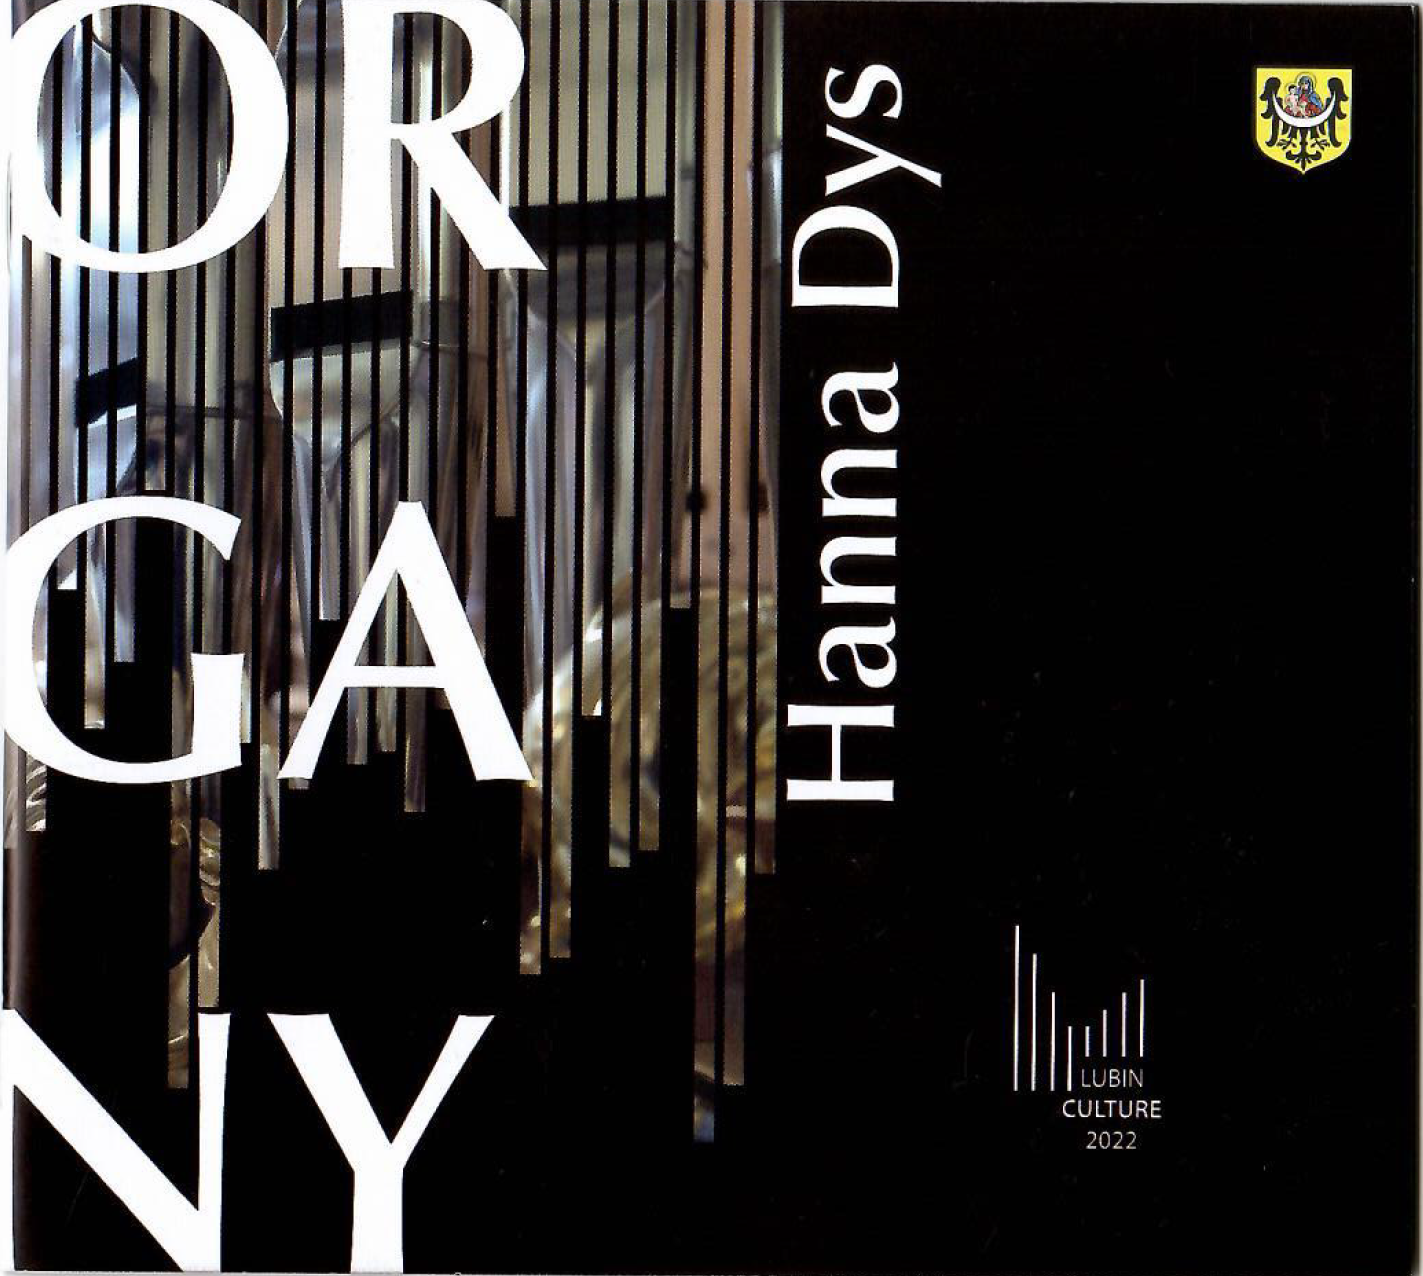 HD Organy CD cover